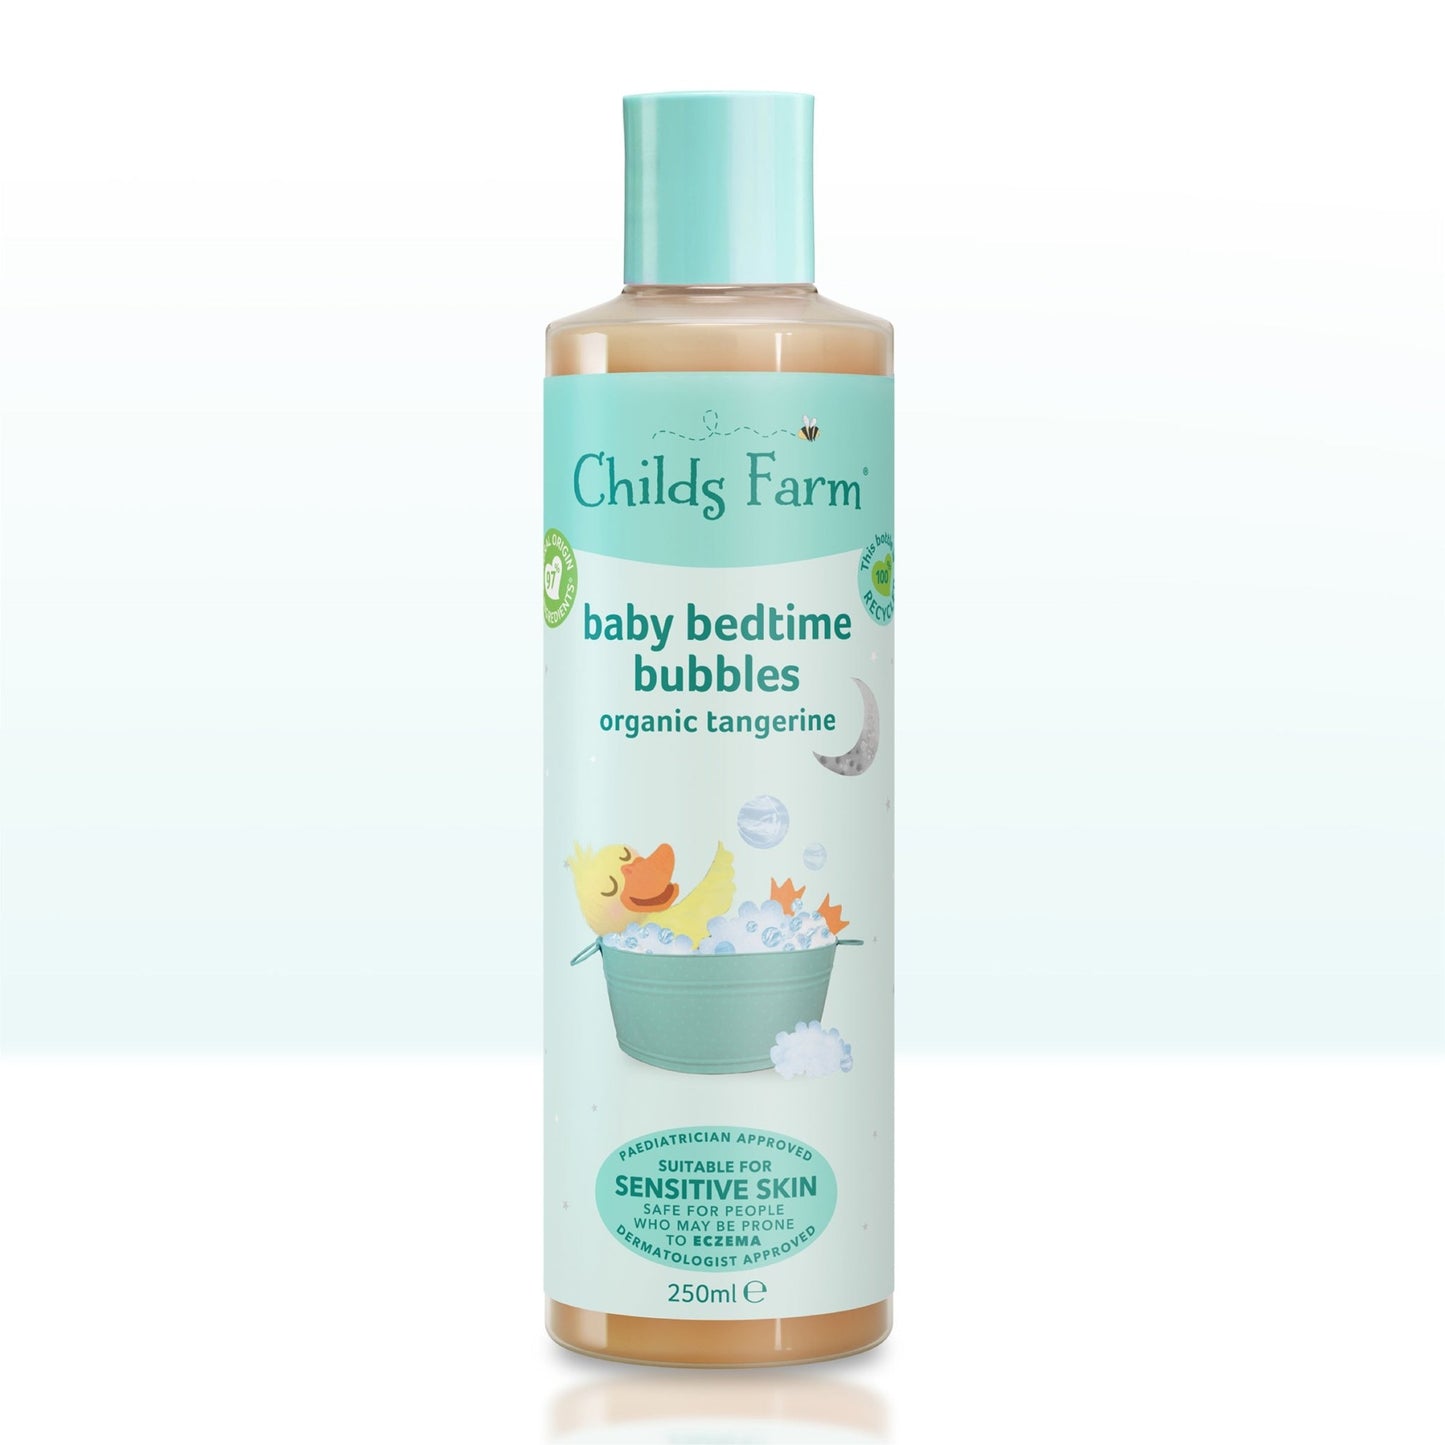 [STAFF] baby bedtime bubbles organic tangerine